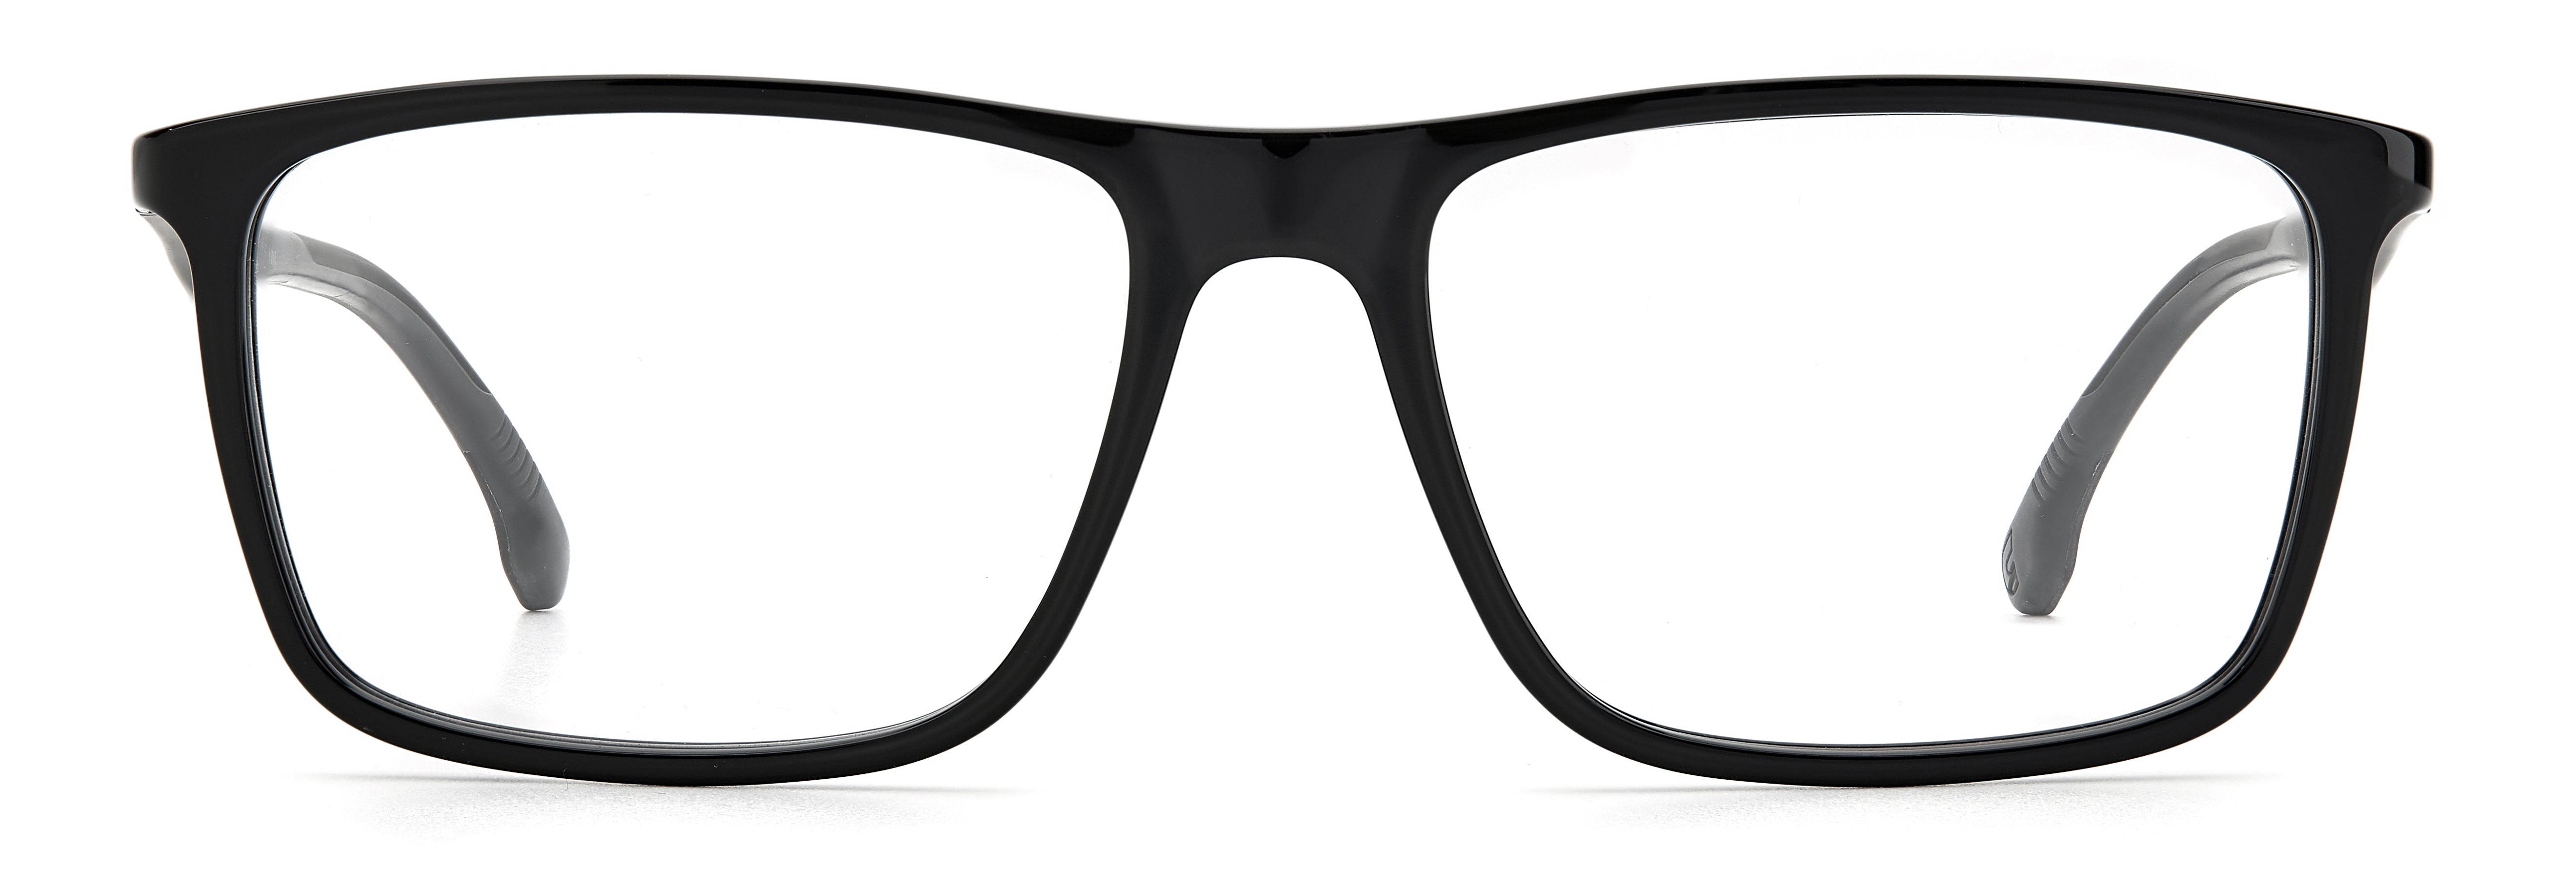 Sunglasses,specsmart, spec smart, glasses, eye glasses glasses frames, where to get glasses in lagos, eye treatment, wellness health care group, carrera 8862